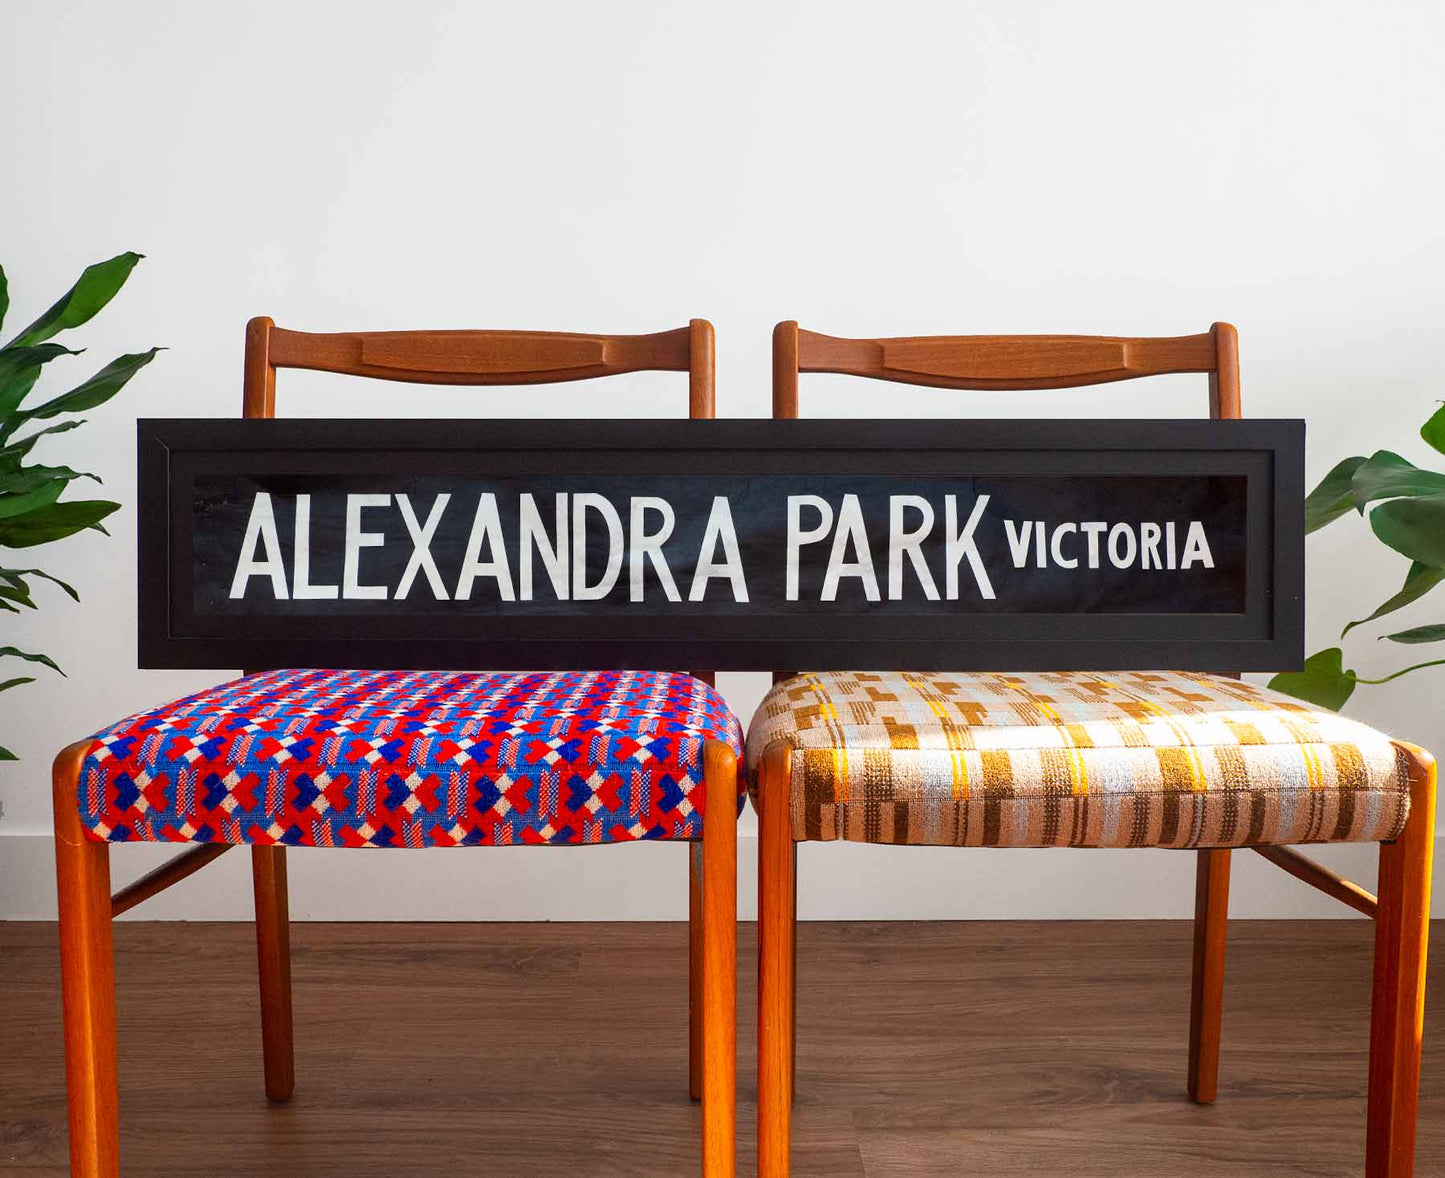 Alexandra Park Victoria Framed London Bus Blind